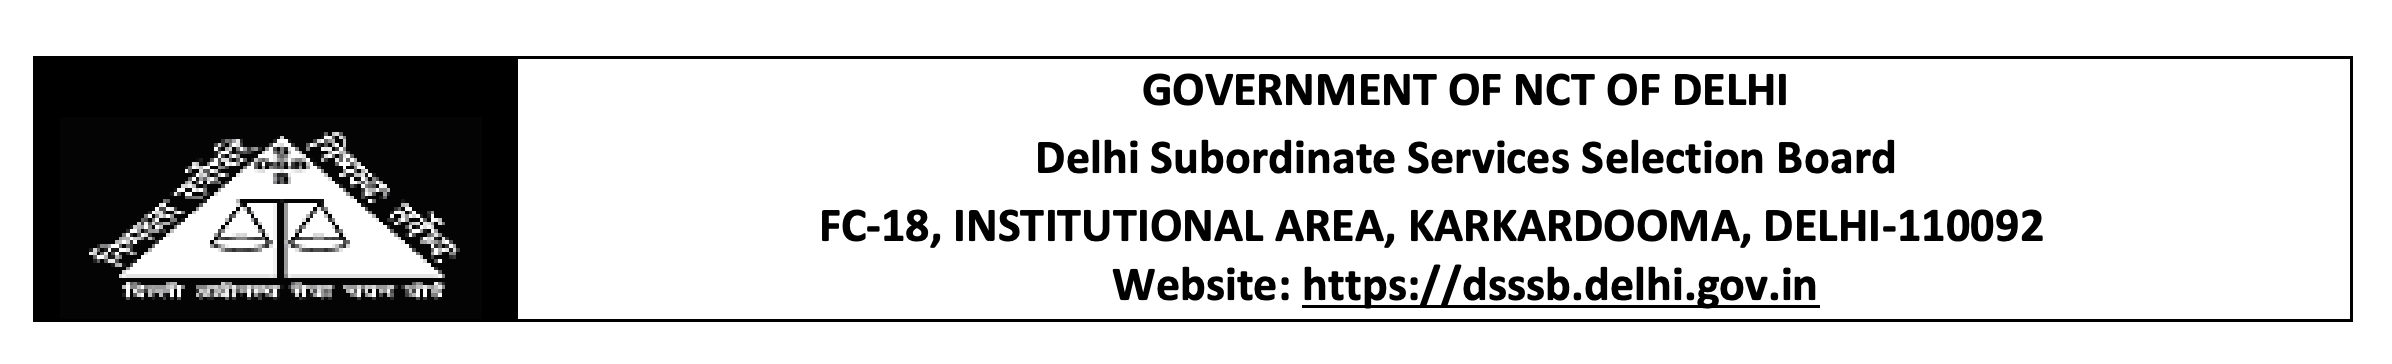 Delhi Subordinate Services Selection Board JObs